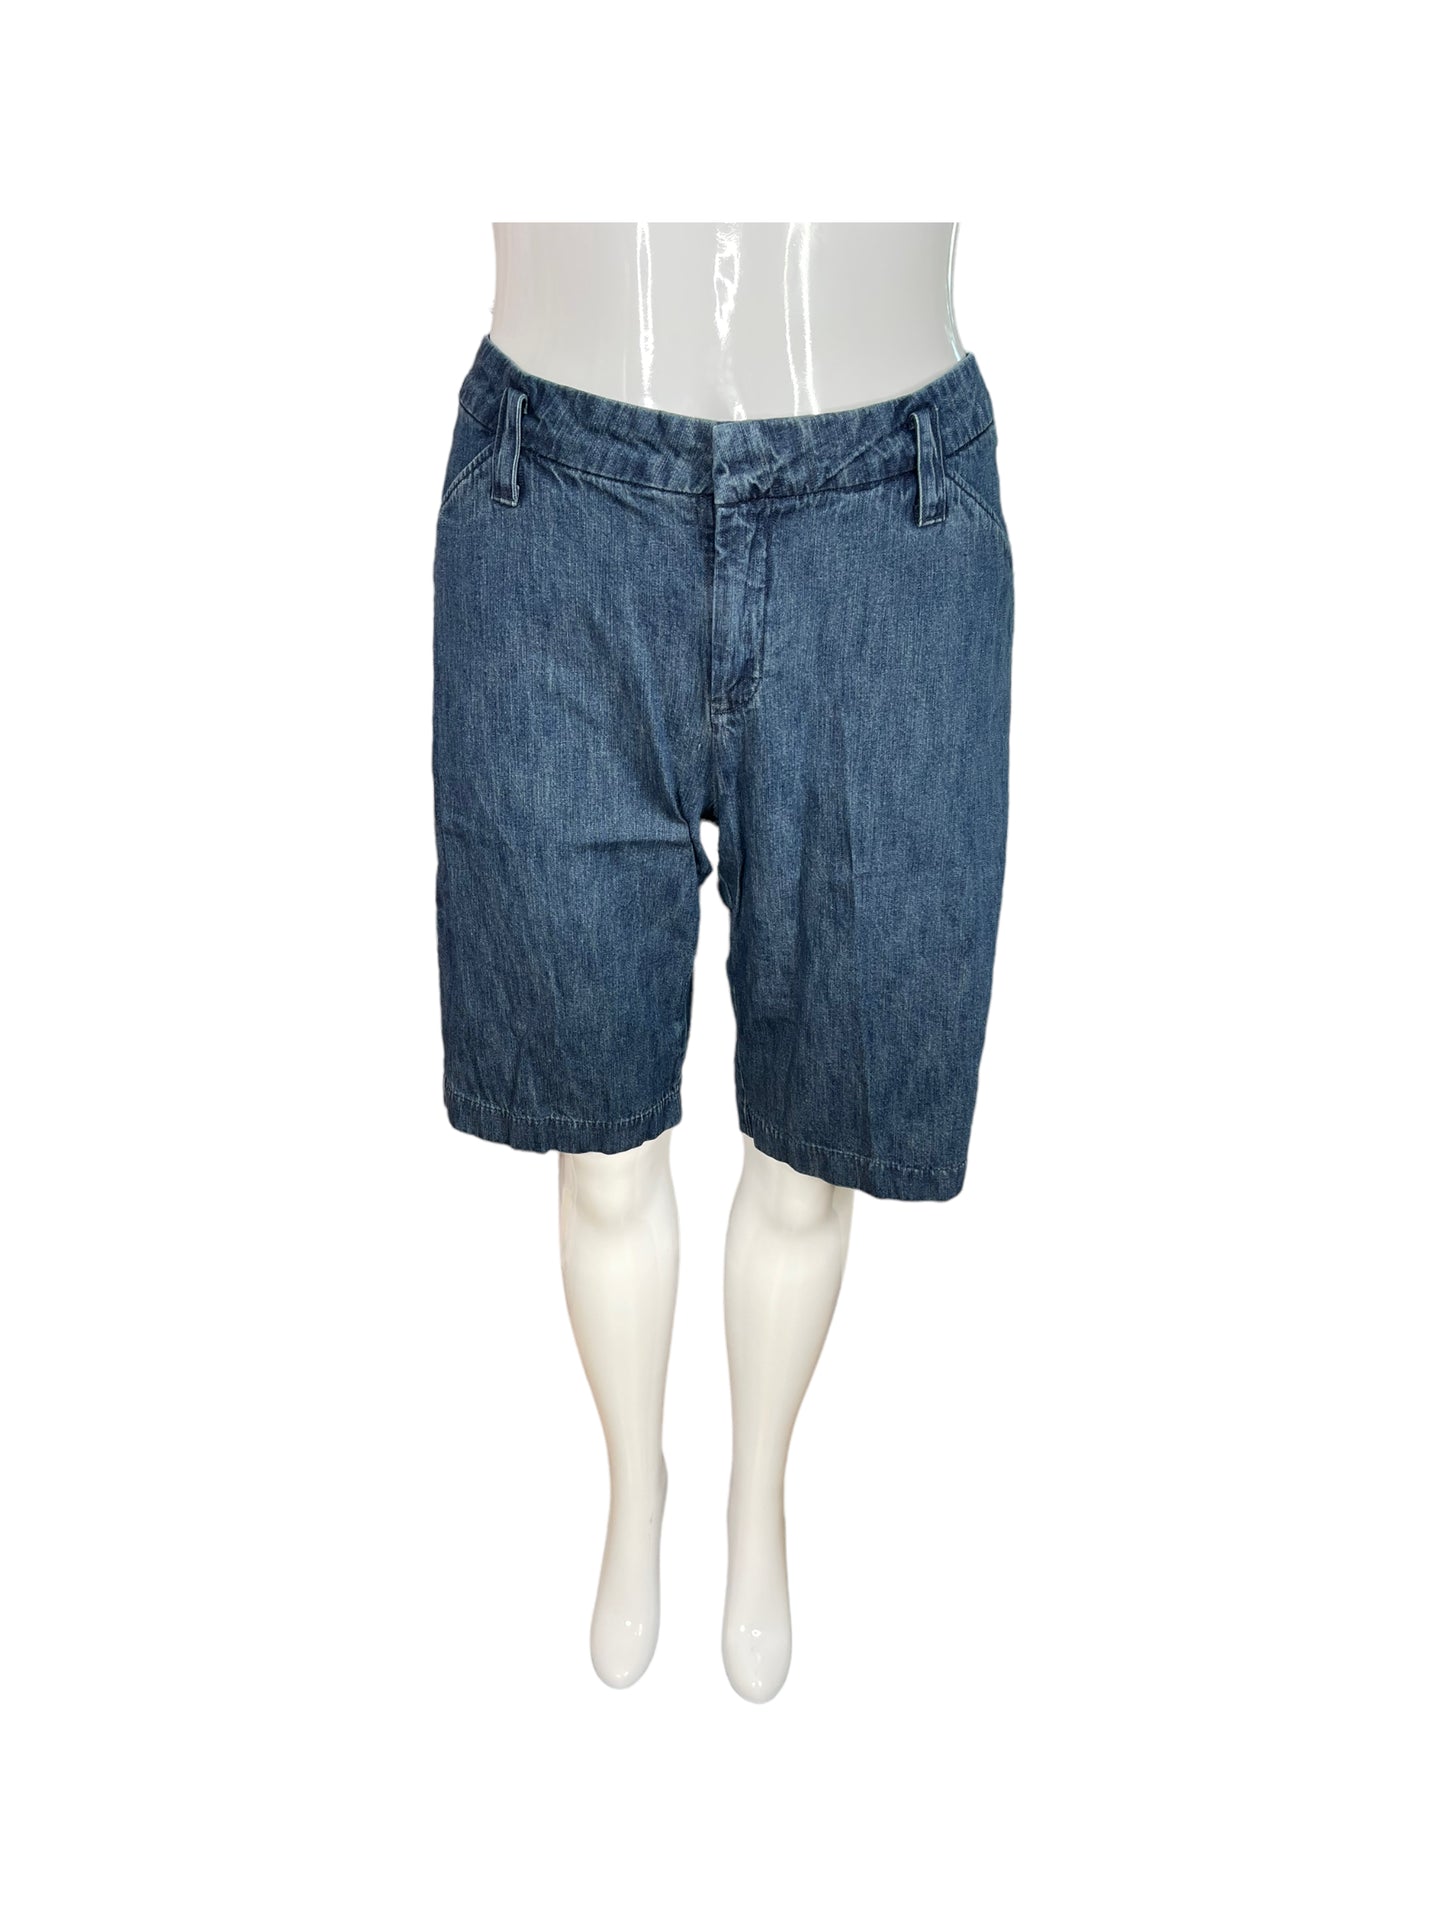 "Lee" Knee-length Blue Jean Shorts (16 medium)